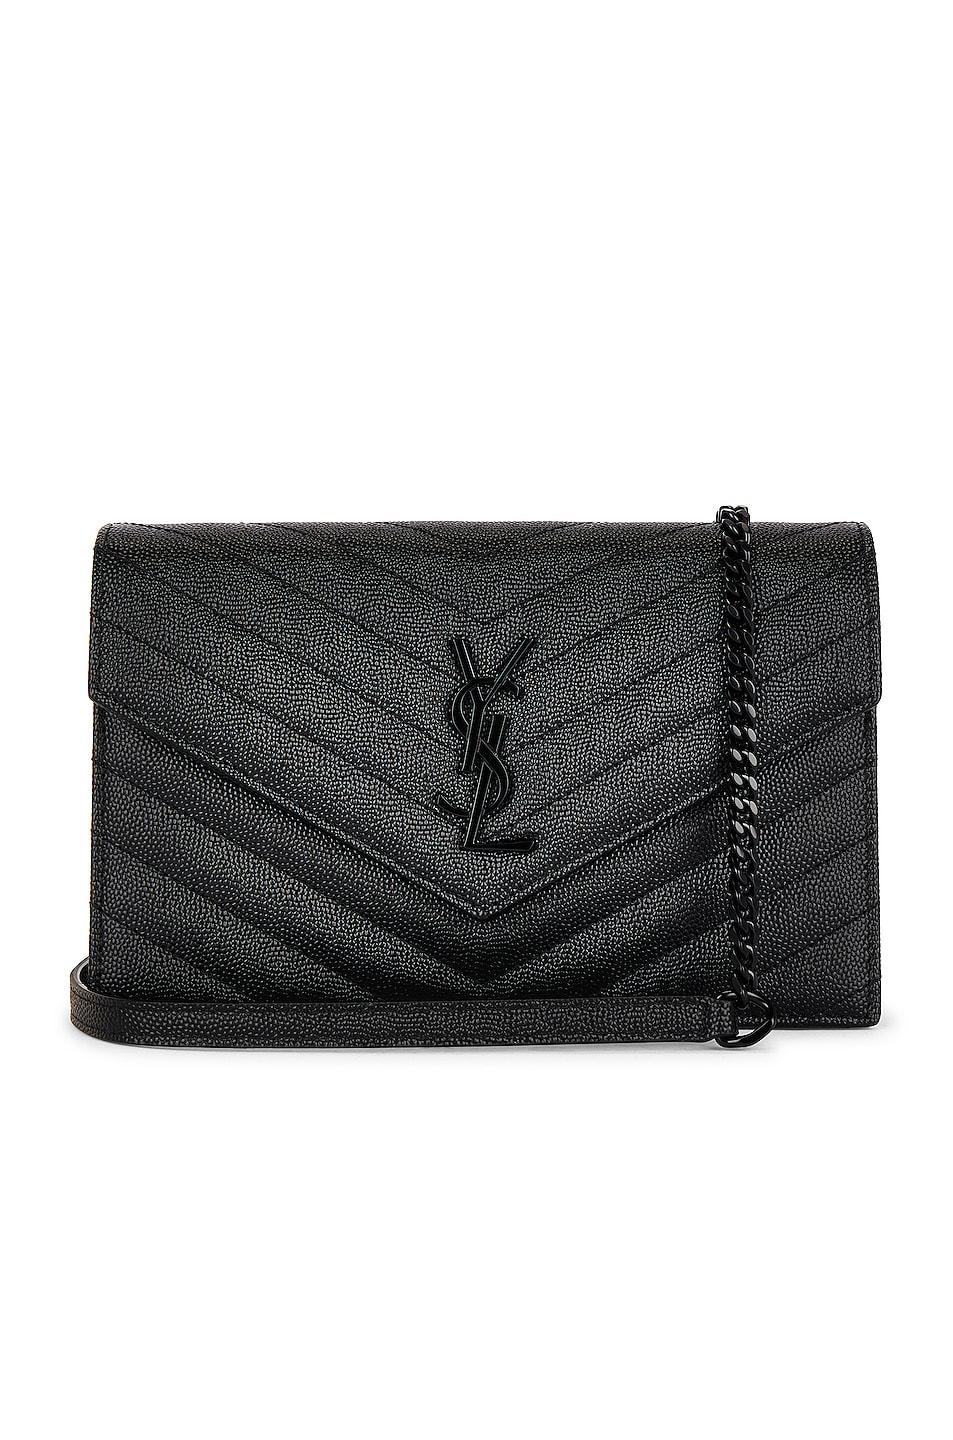 Saint Laurent Cassandra Envelope Chain Wallet Bag in Black | Lyst